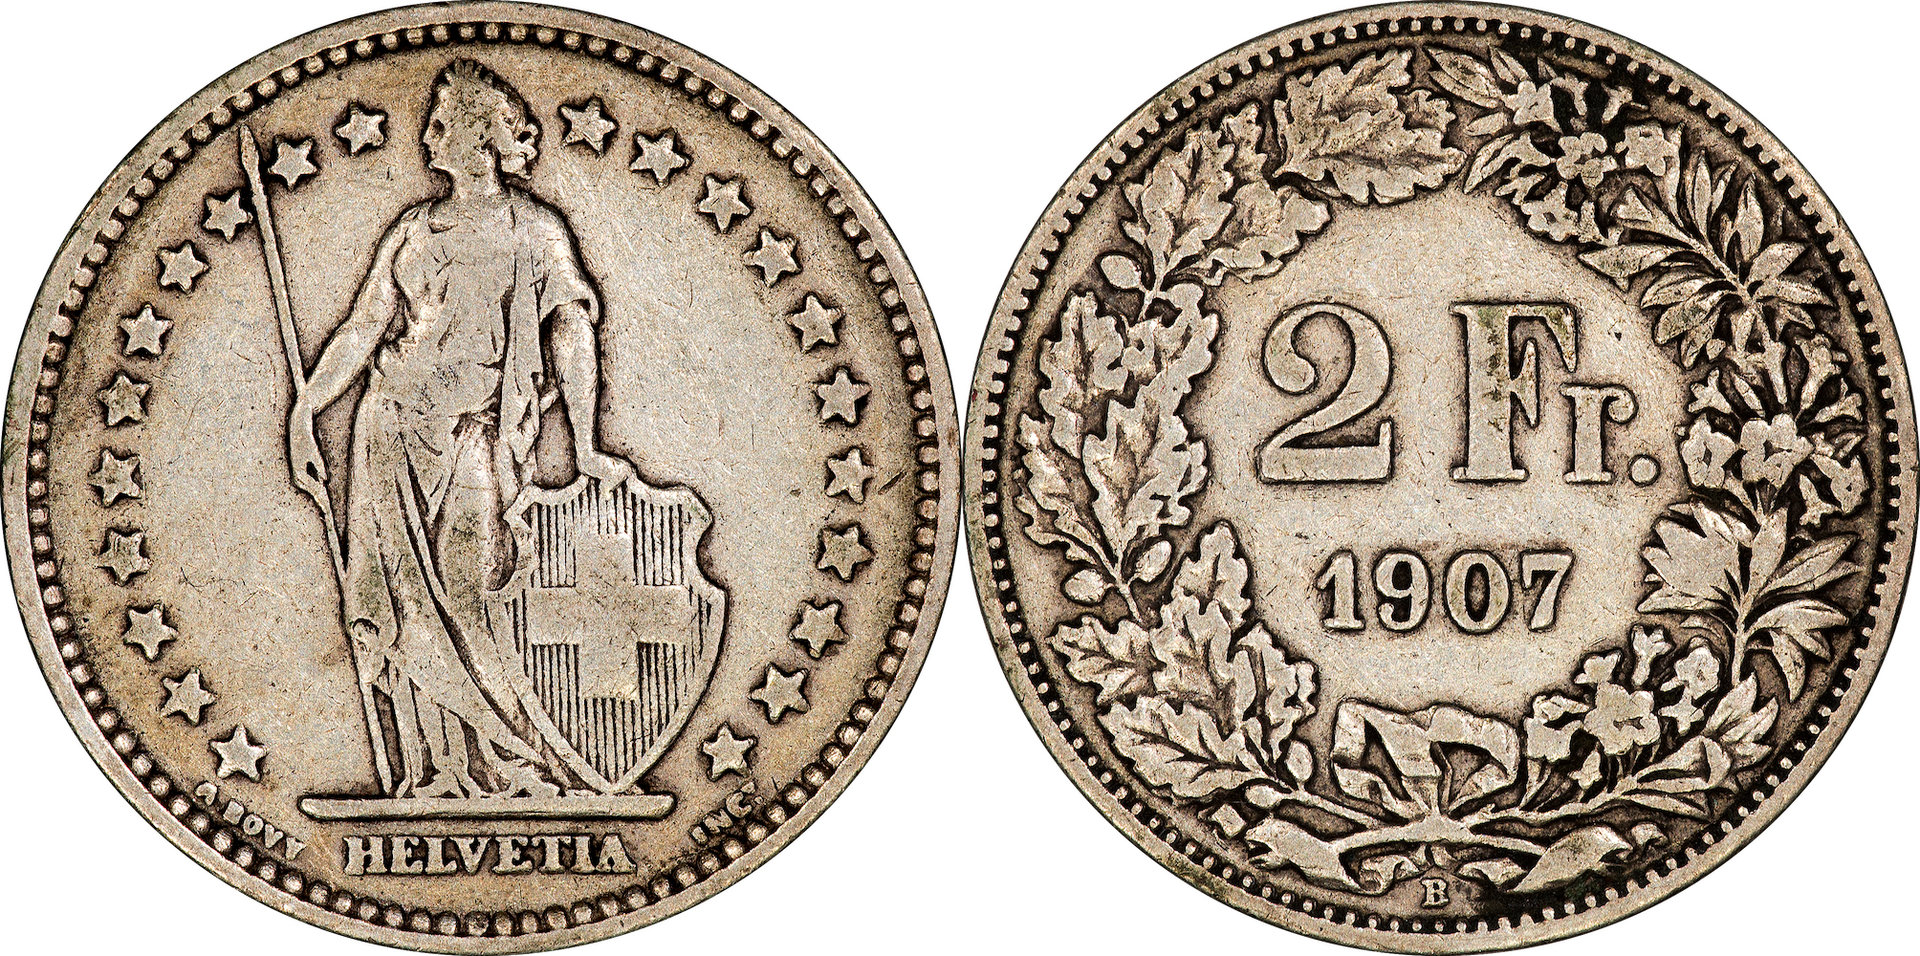 Switzerland - 1907 B 2 Francs.jpg